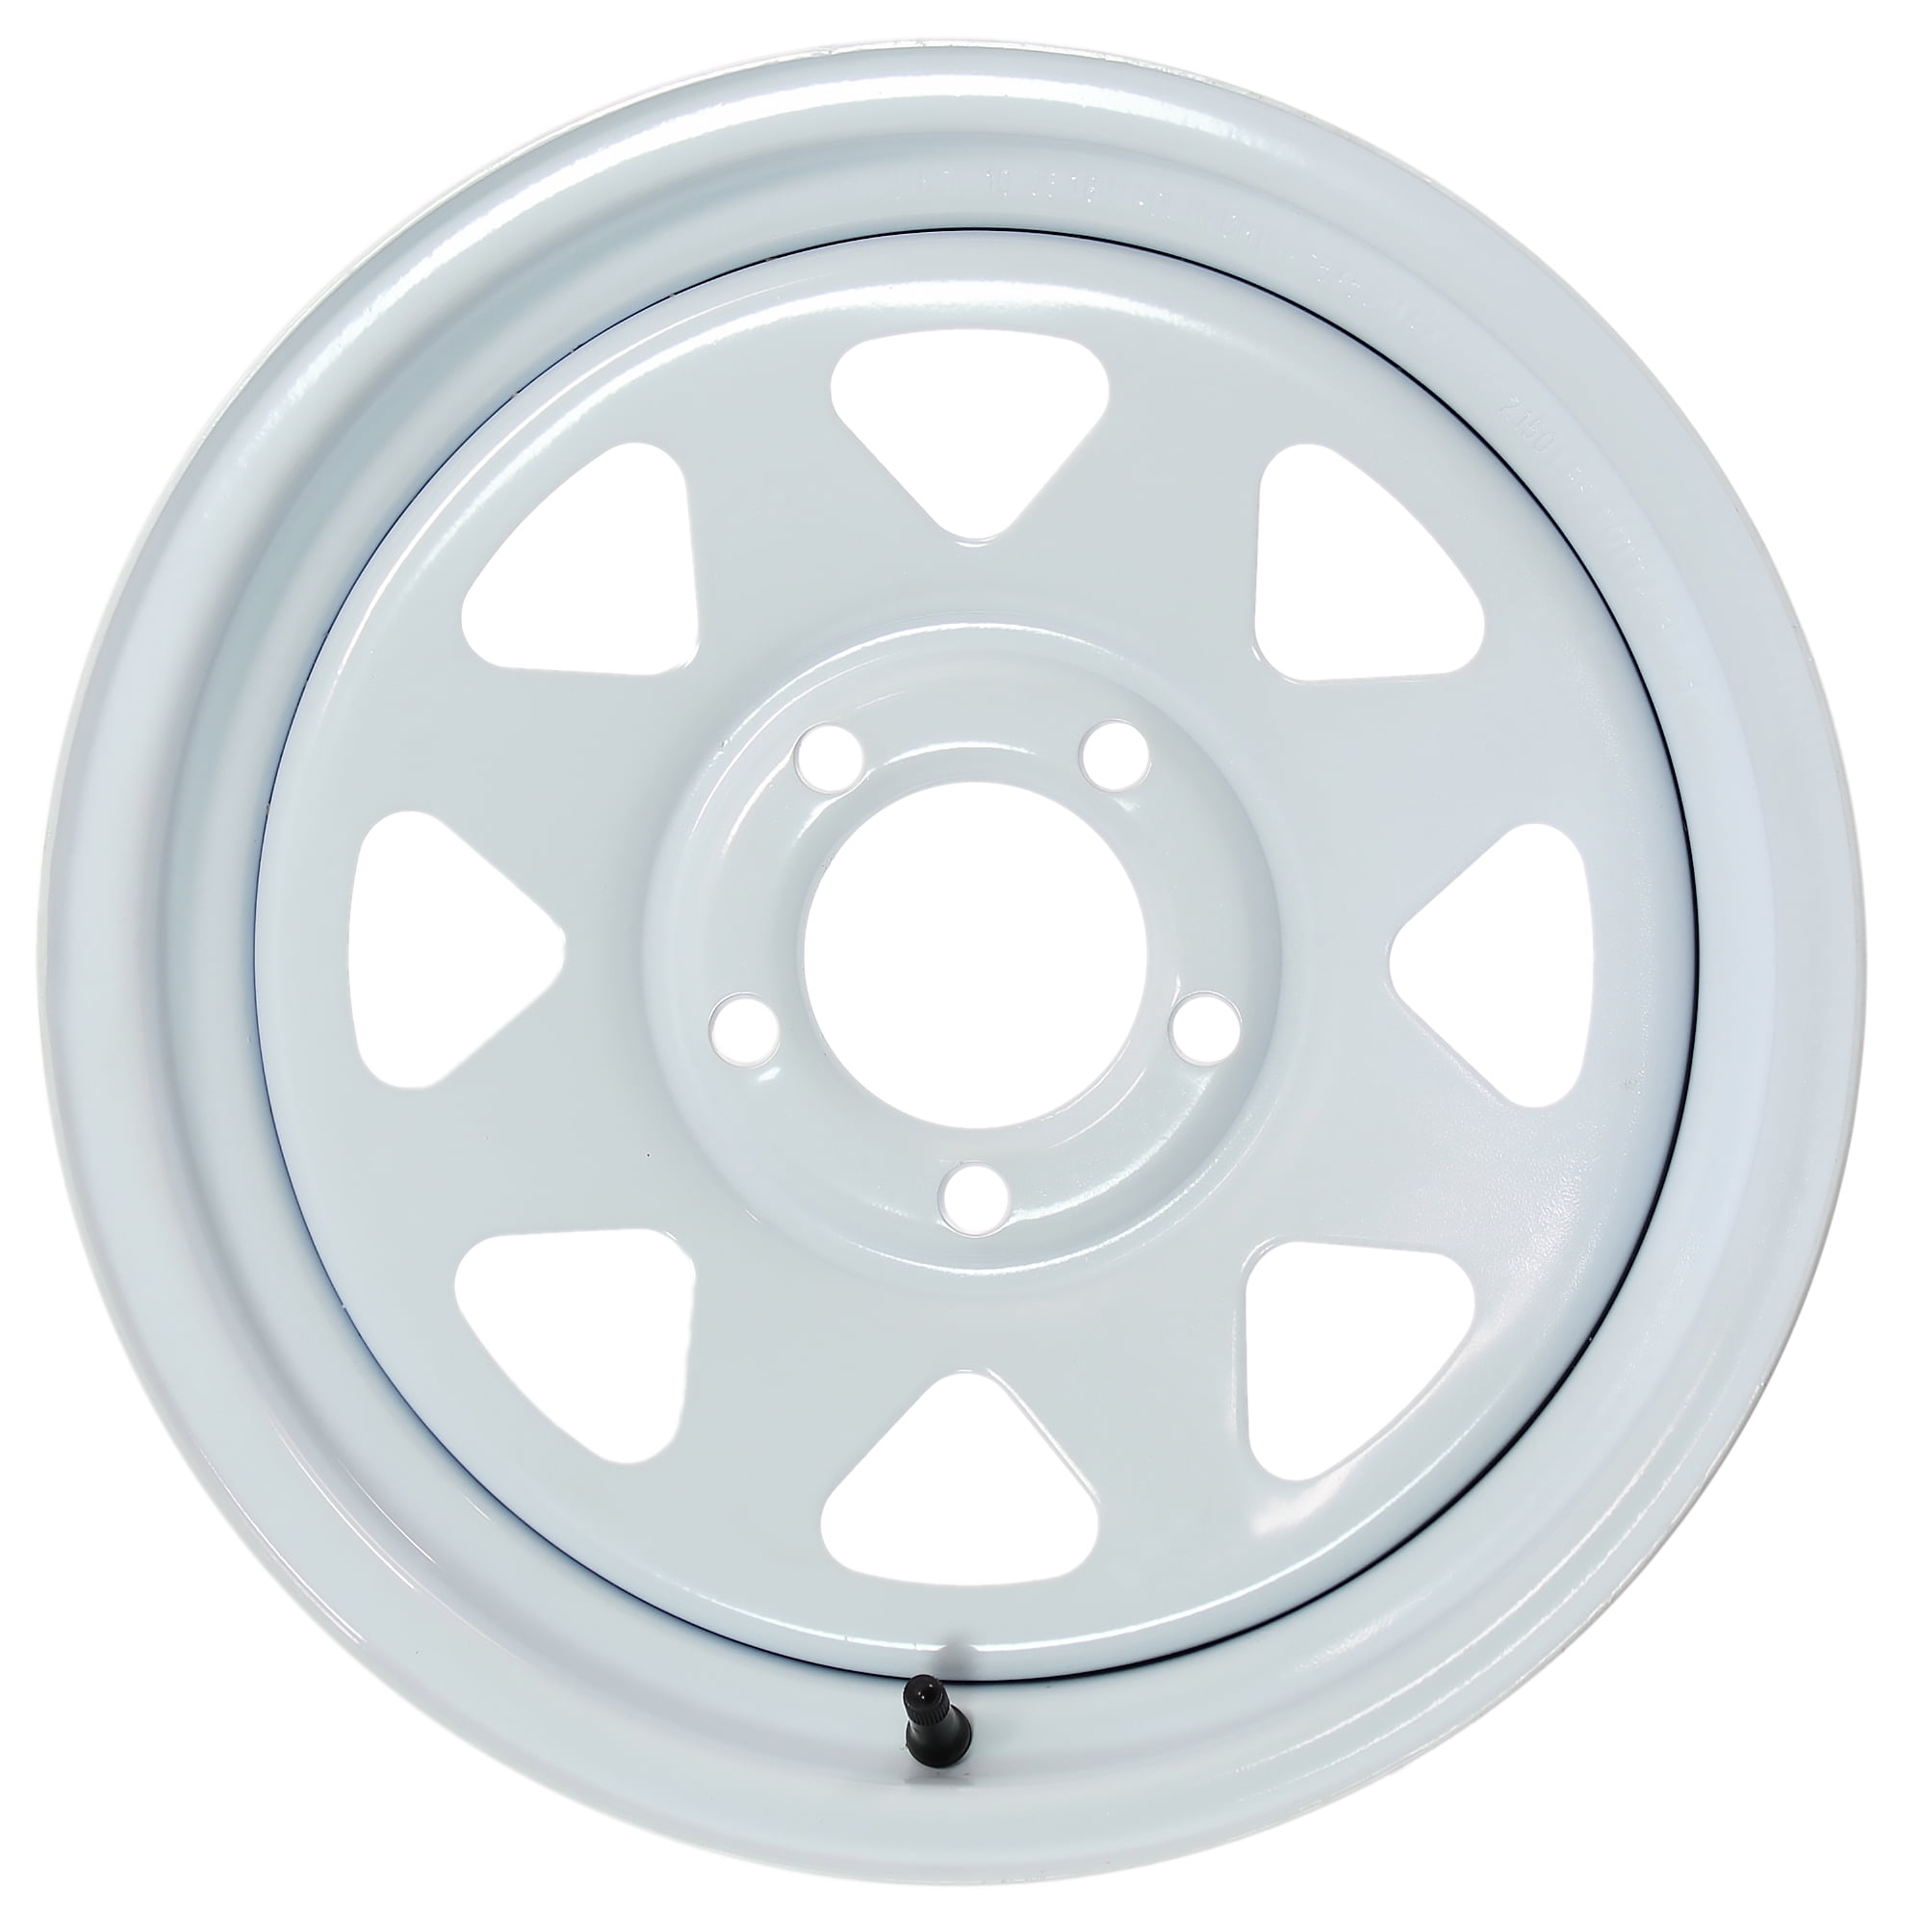 3.19CB eCustomrim Trailer Wheel Rim 15X5 J 5-4.5 White Spoke 2150 Lb 